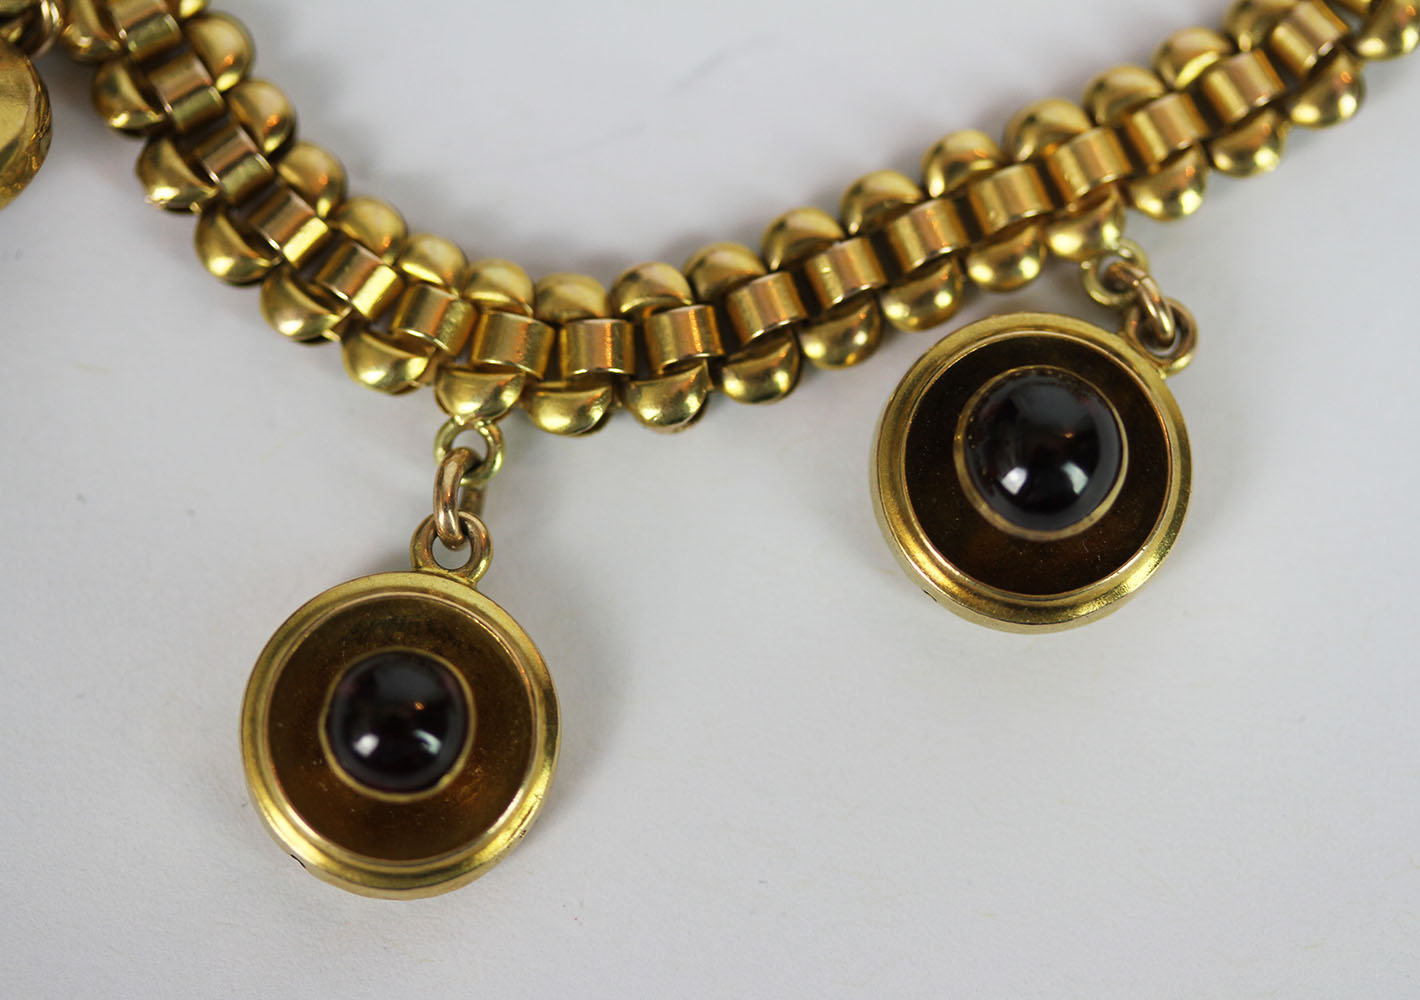 Garnet set bracelet, set with 6 cabochon cut garnet charms, not hallmarked, approximate length 18cm, - Image 3 of 3